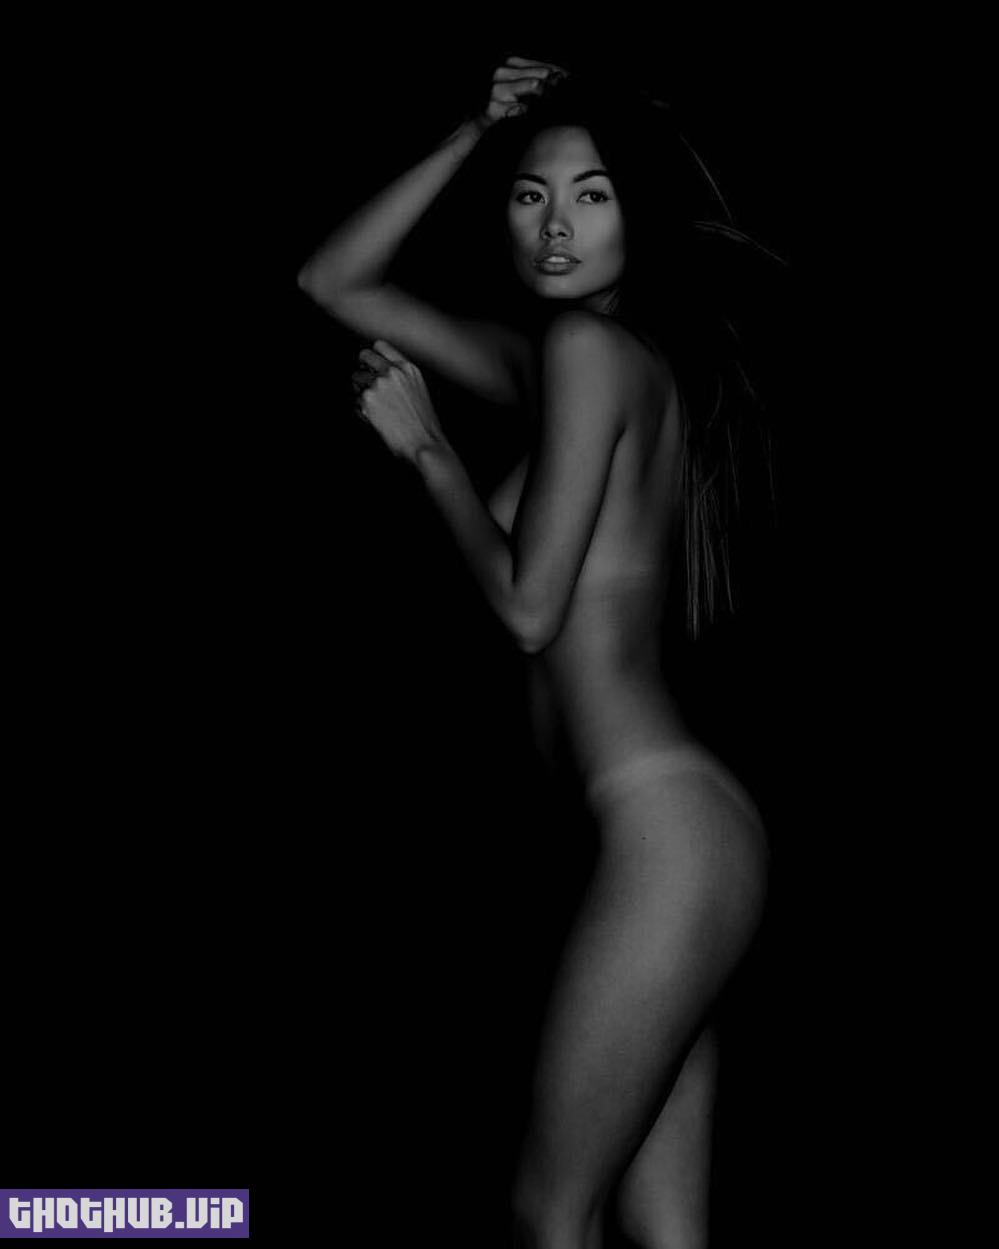 Swedish Model Jennifer Berg Nude Photo Shoot